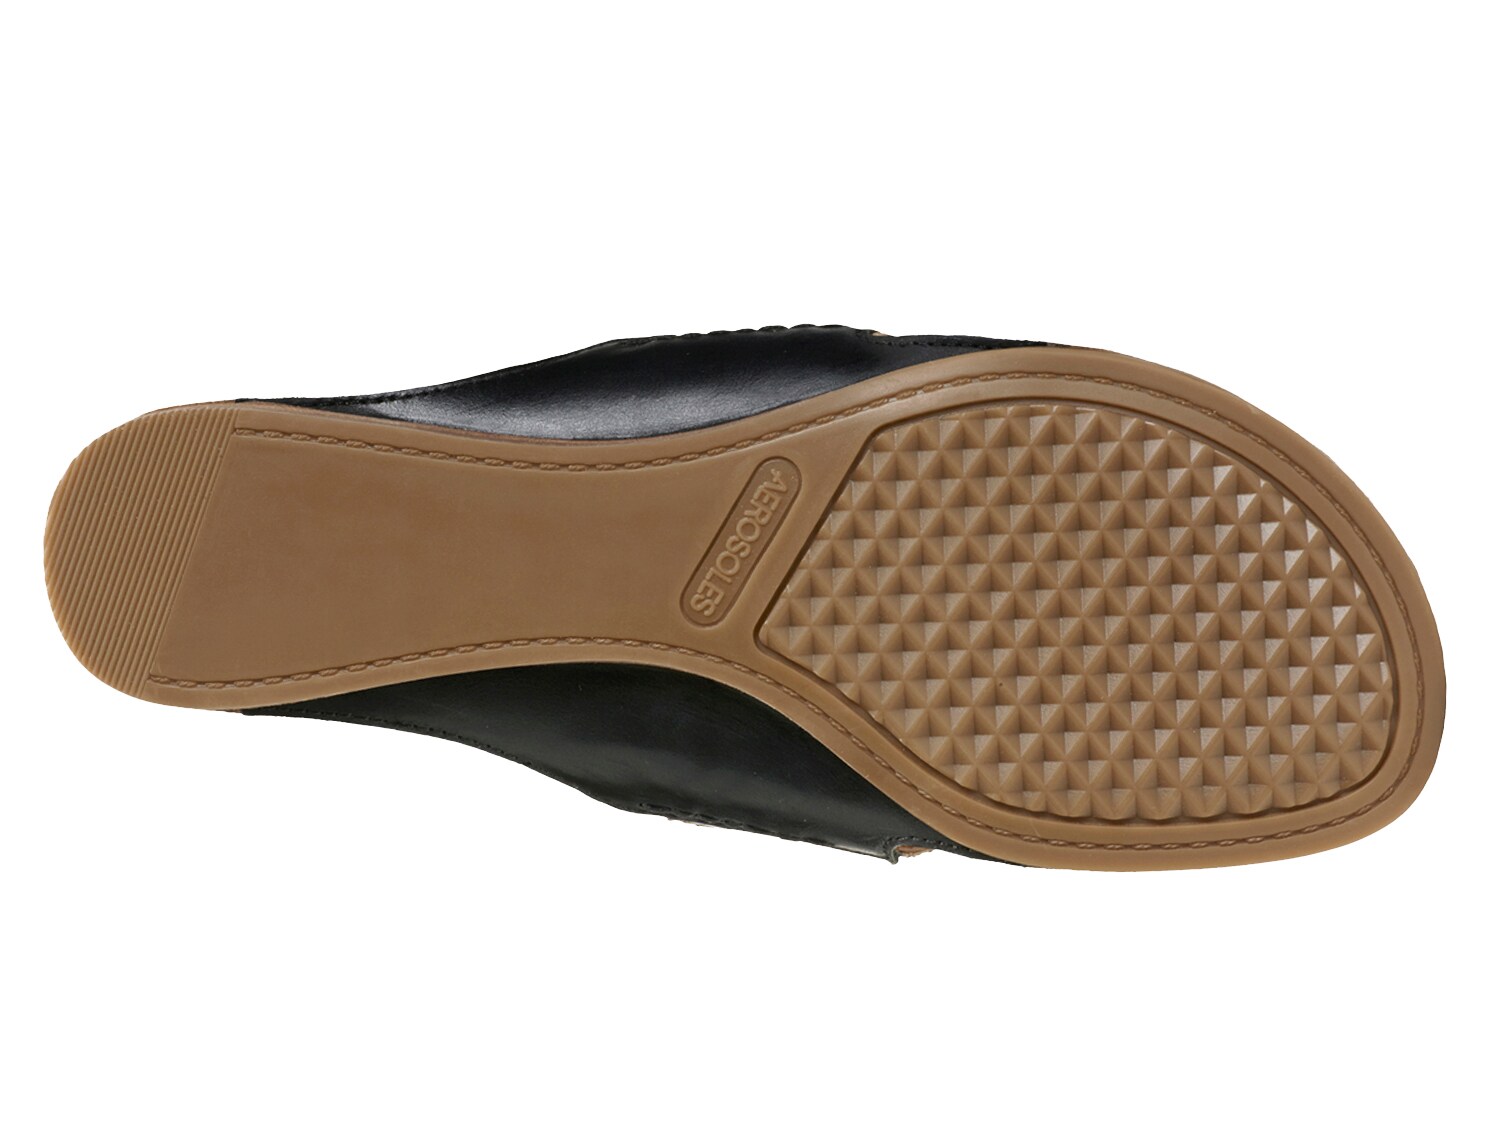 aerosoles pocketbook sandals